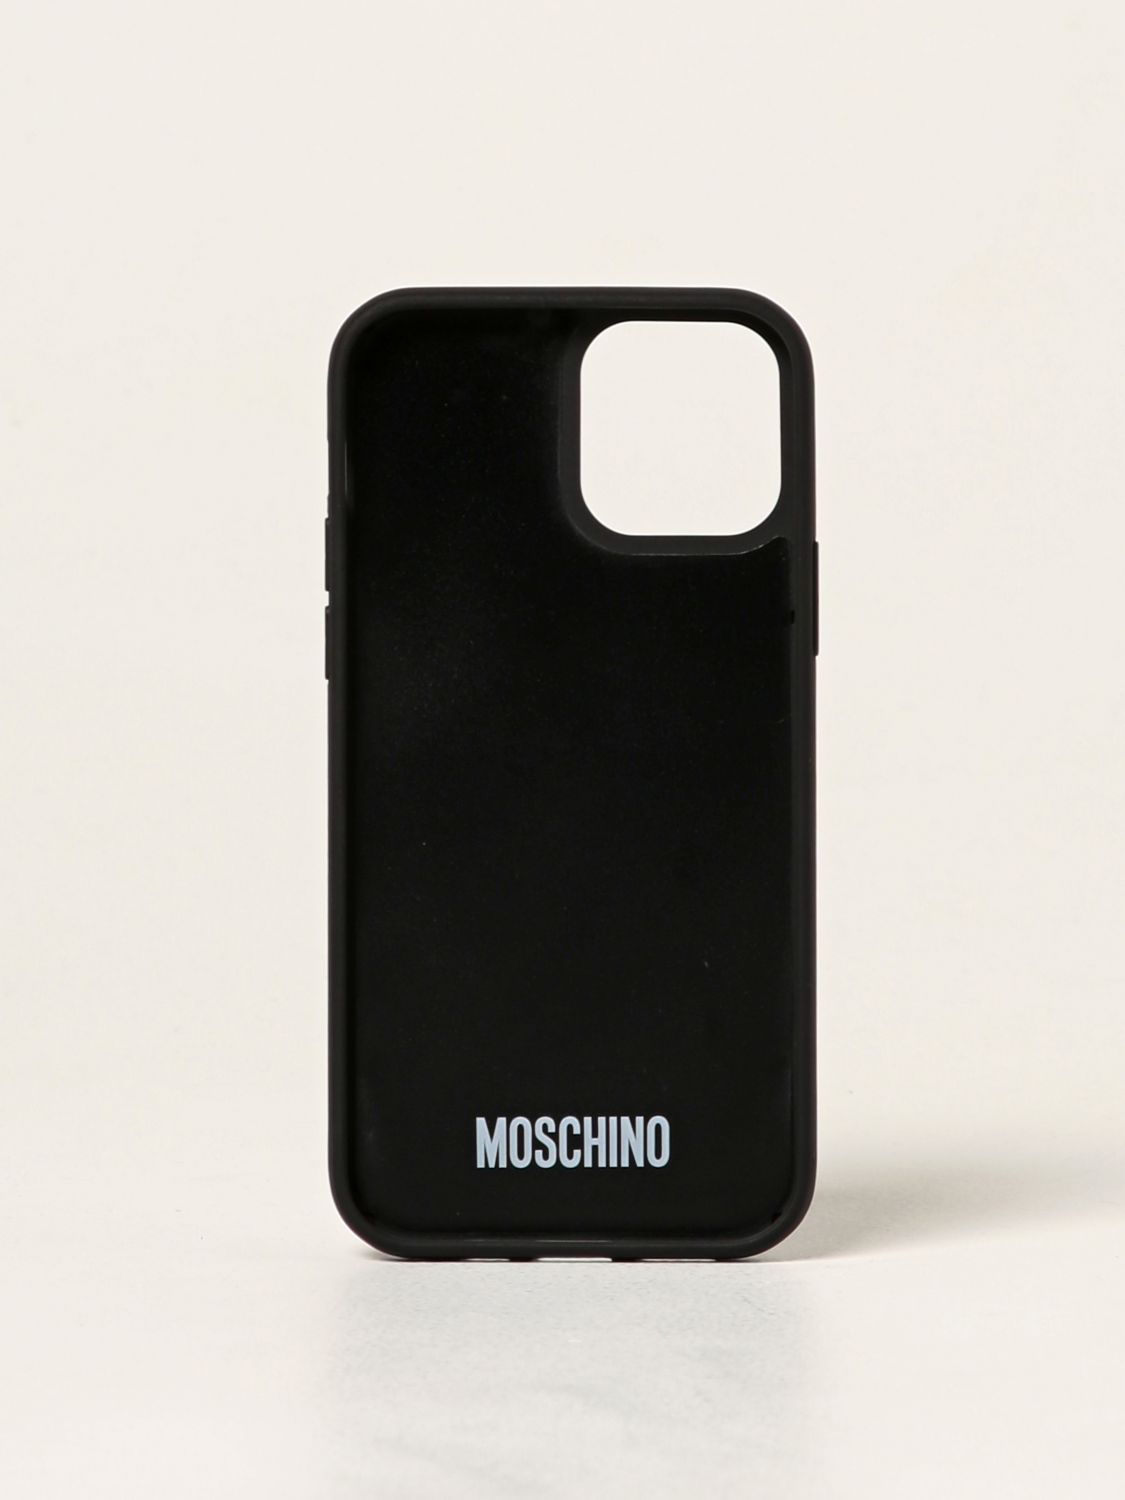 Moschino Couture Iphone 12 12 Pro Teddy Cover Black Case Moschino Couture Giglio Com